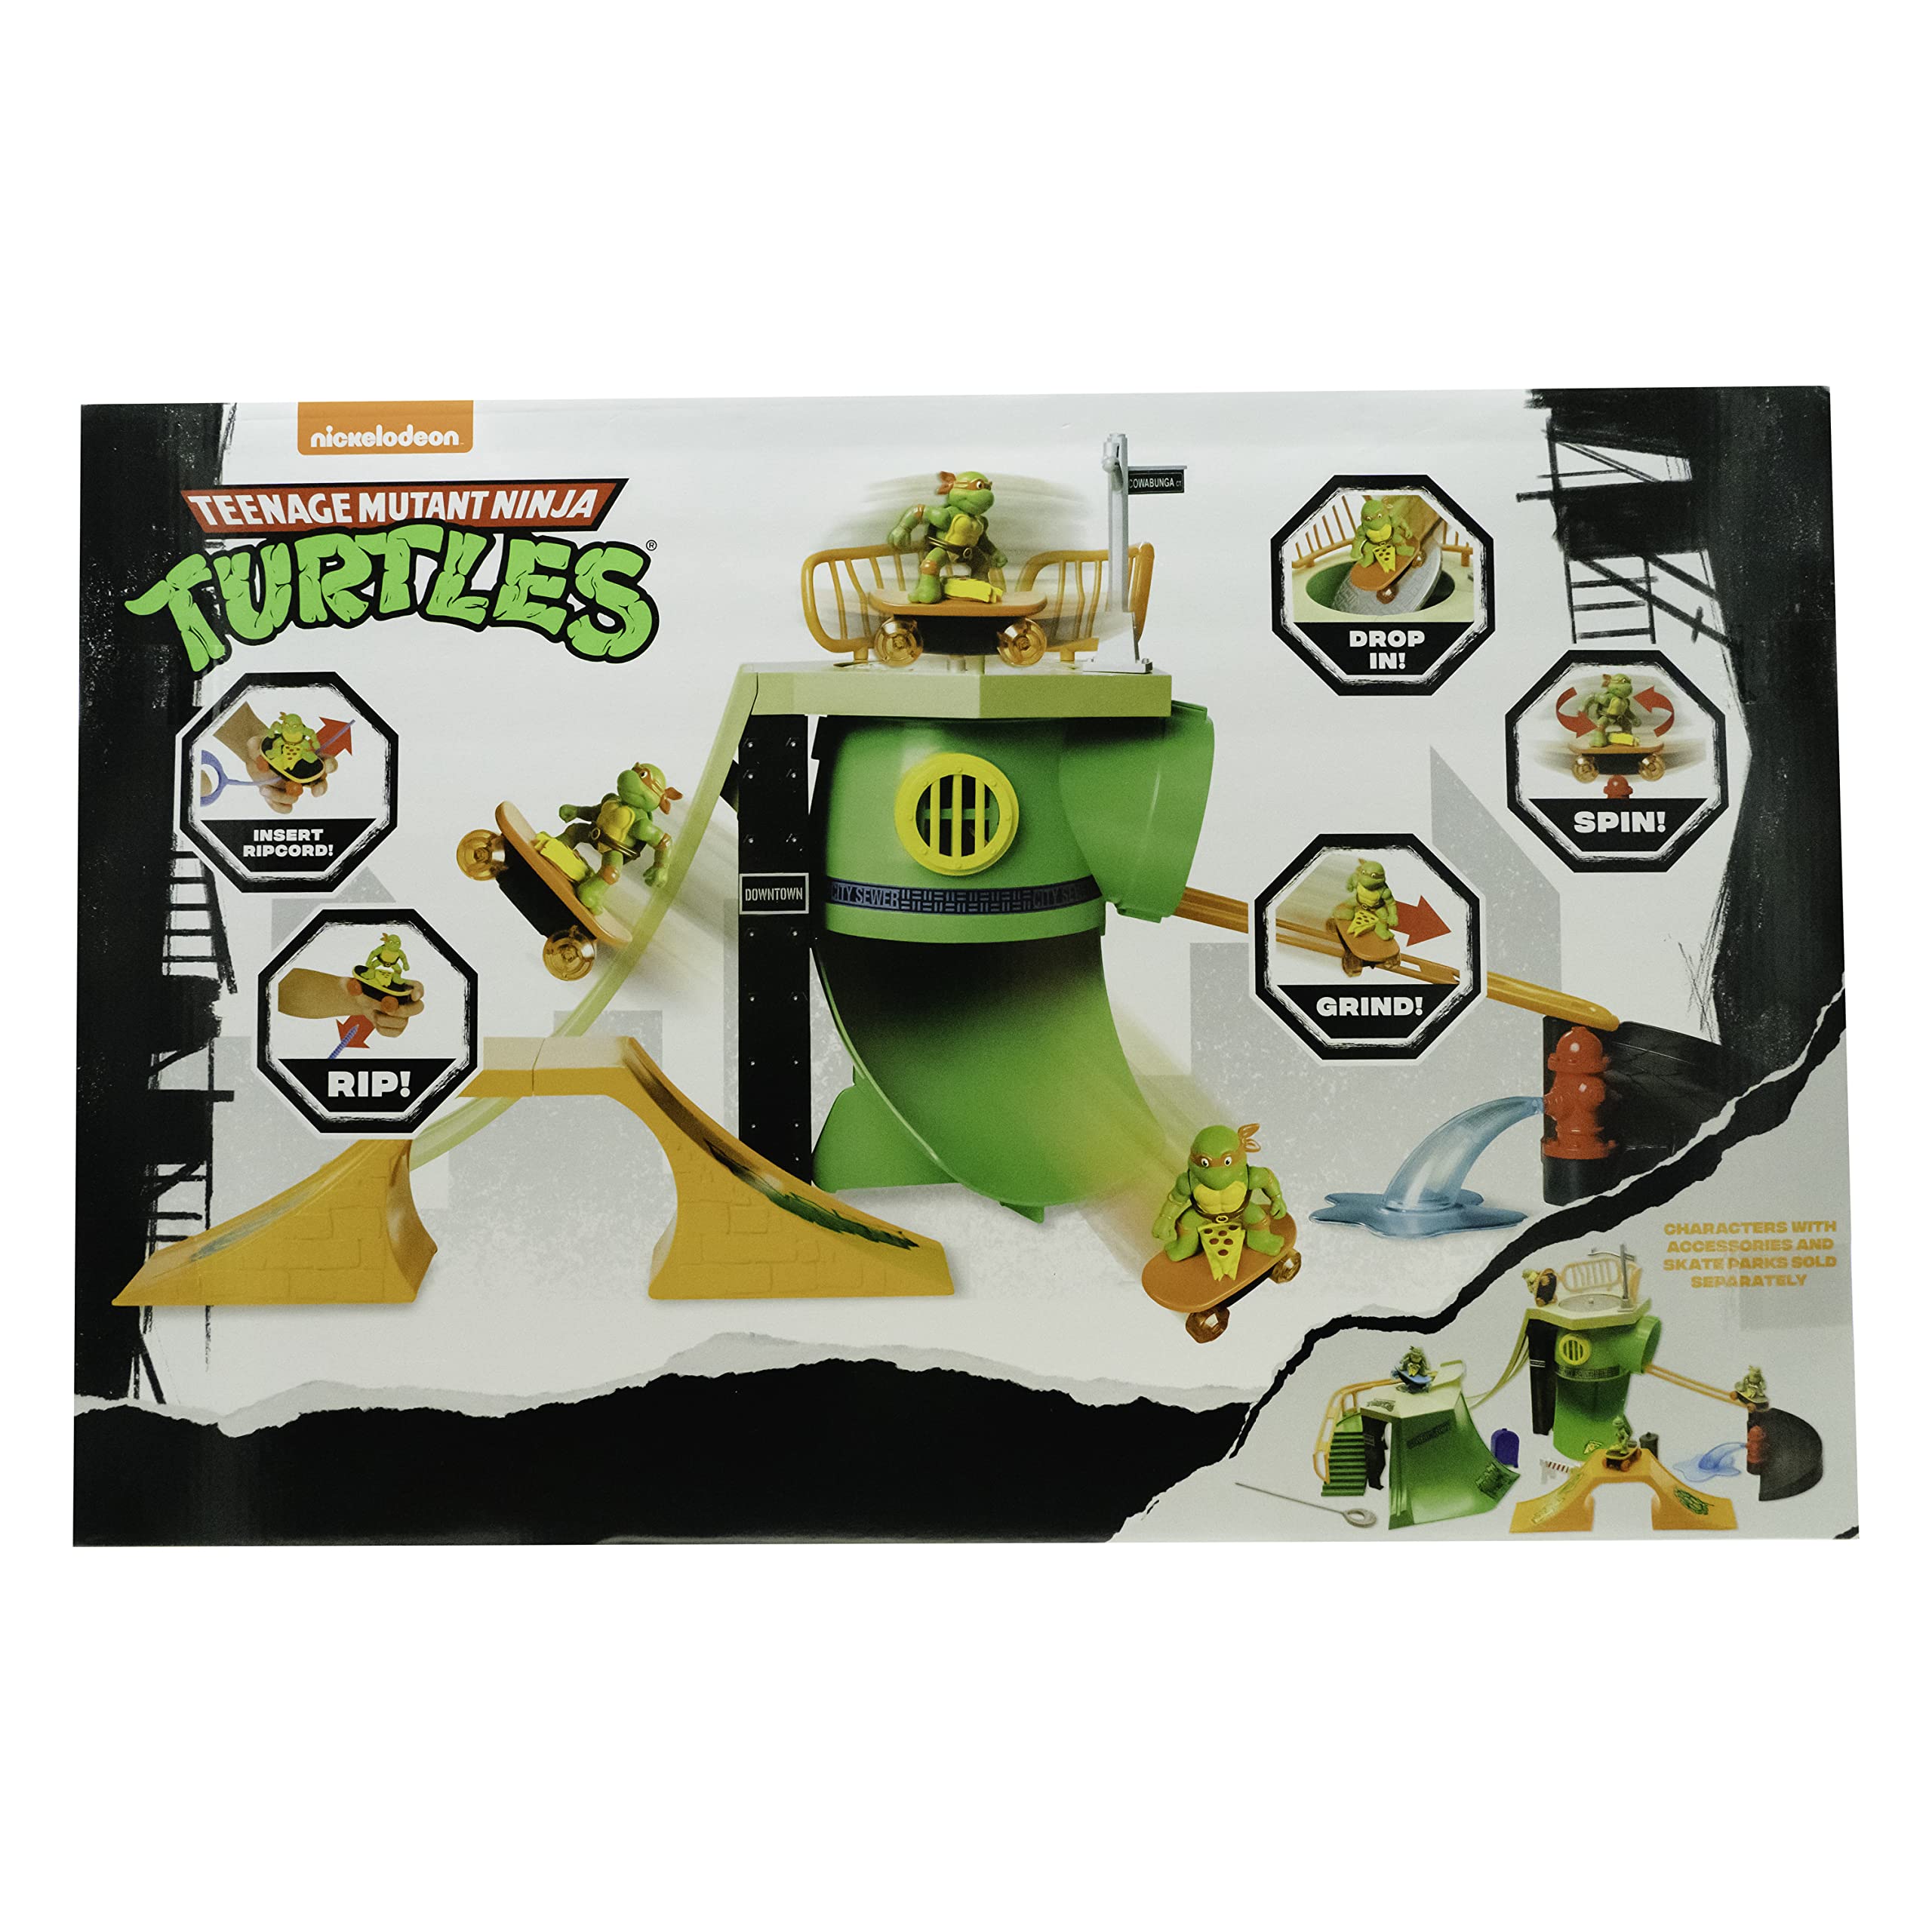 Teenage Mutant Ninja Turtles, Turtle Madness Skate Park, Classic Edition, Ages 3 and up